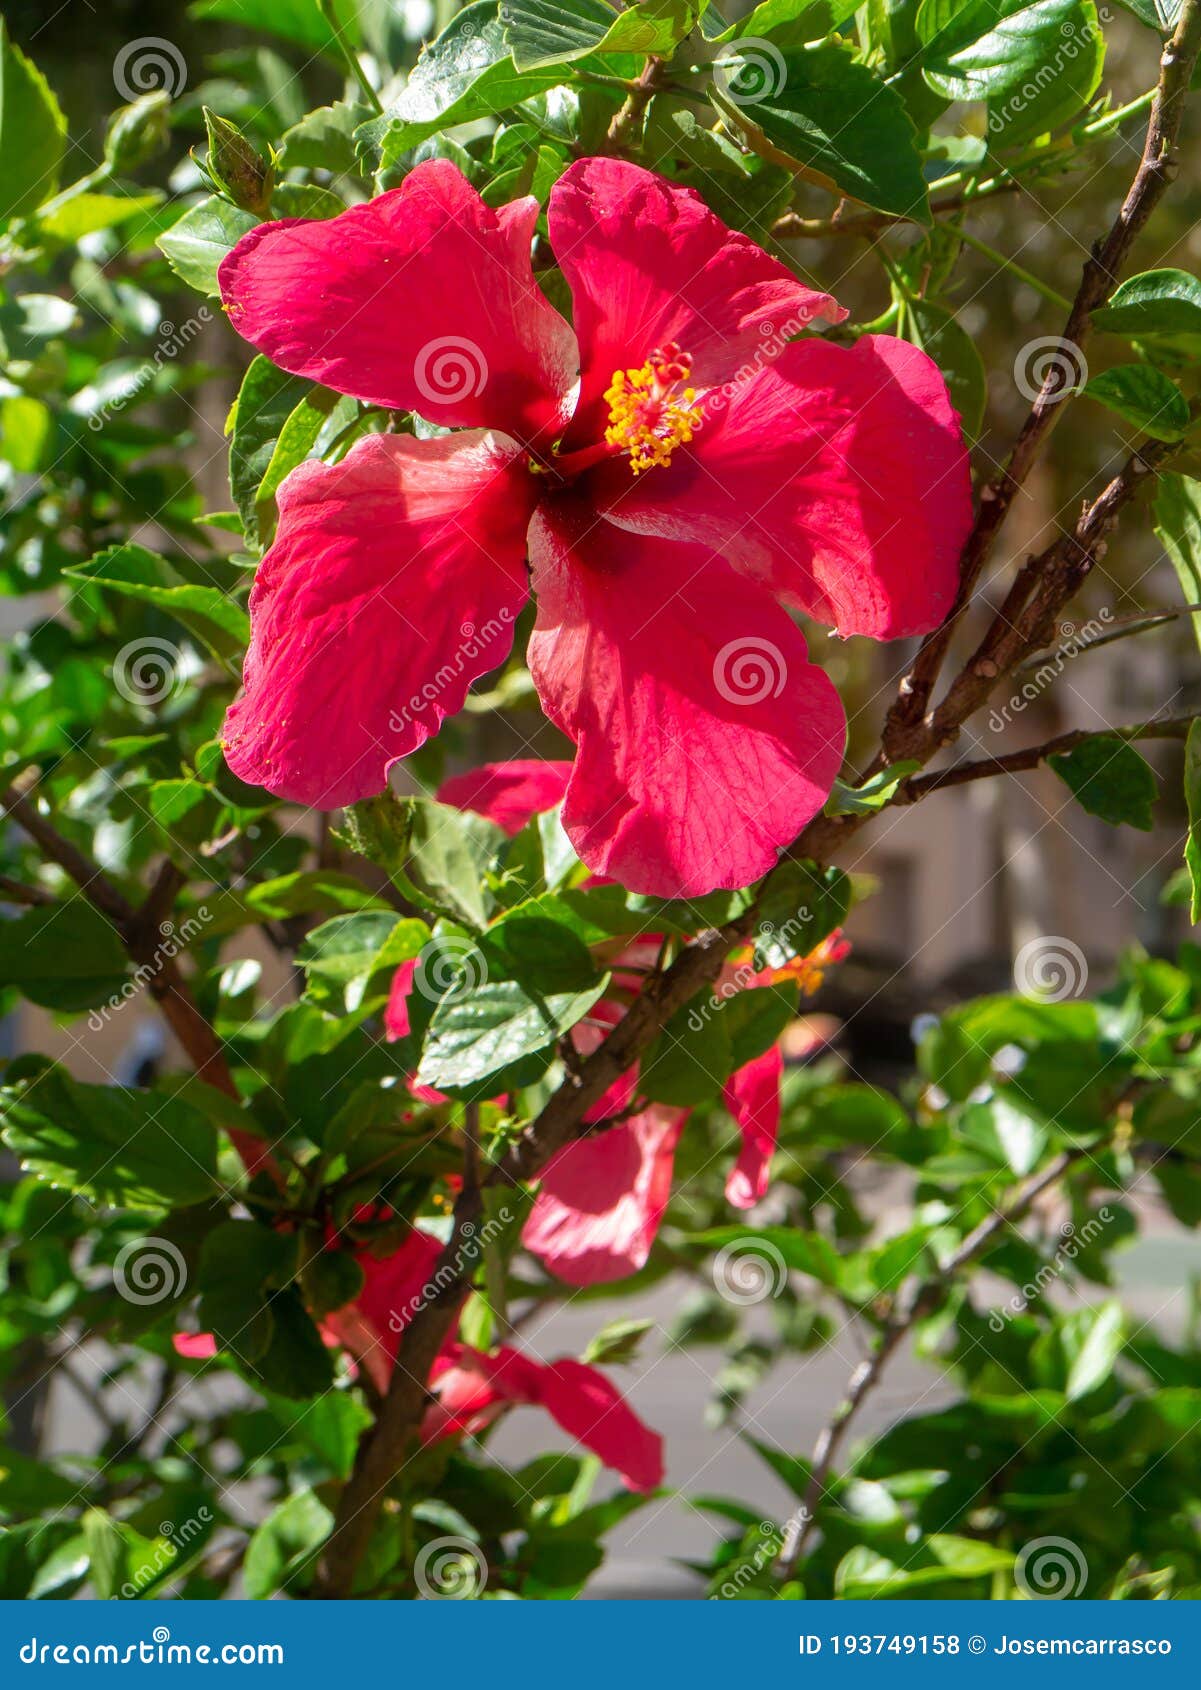 plant called hibiscus or hibisco